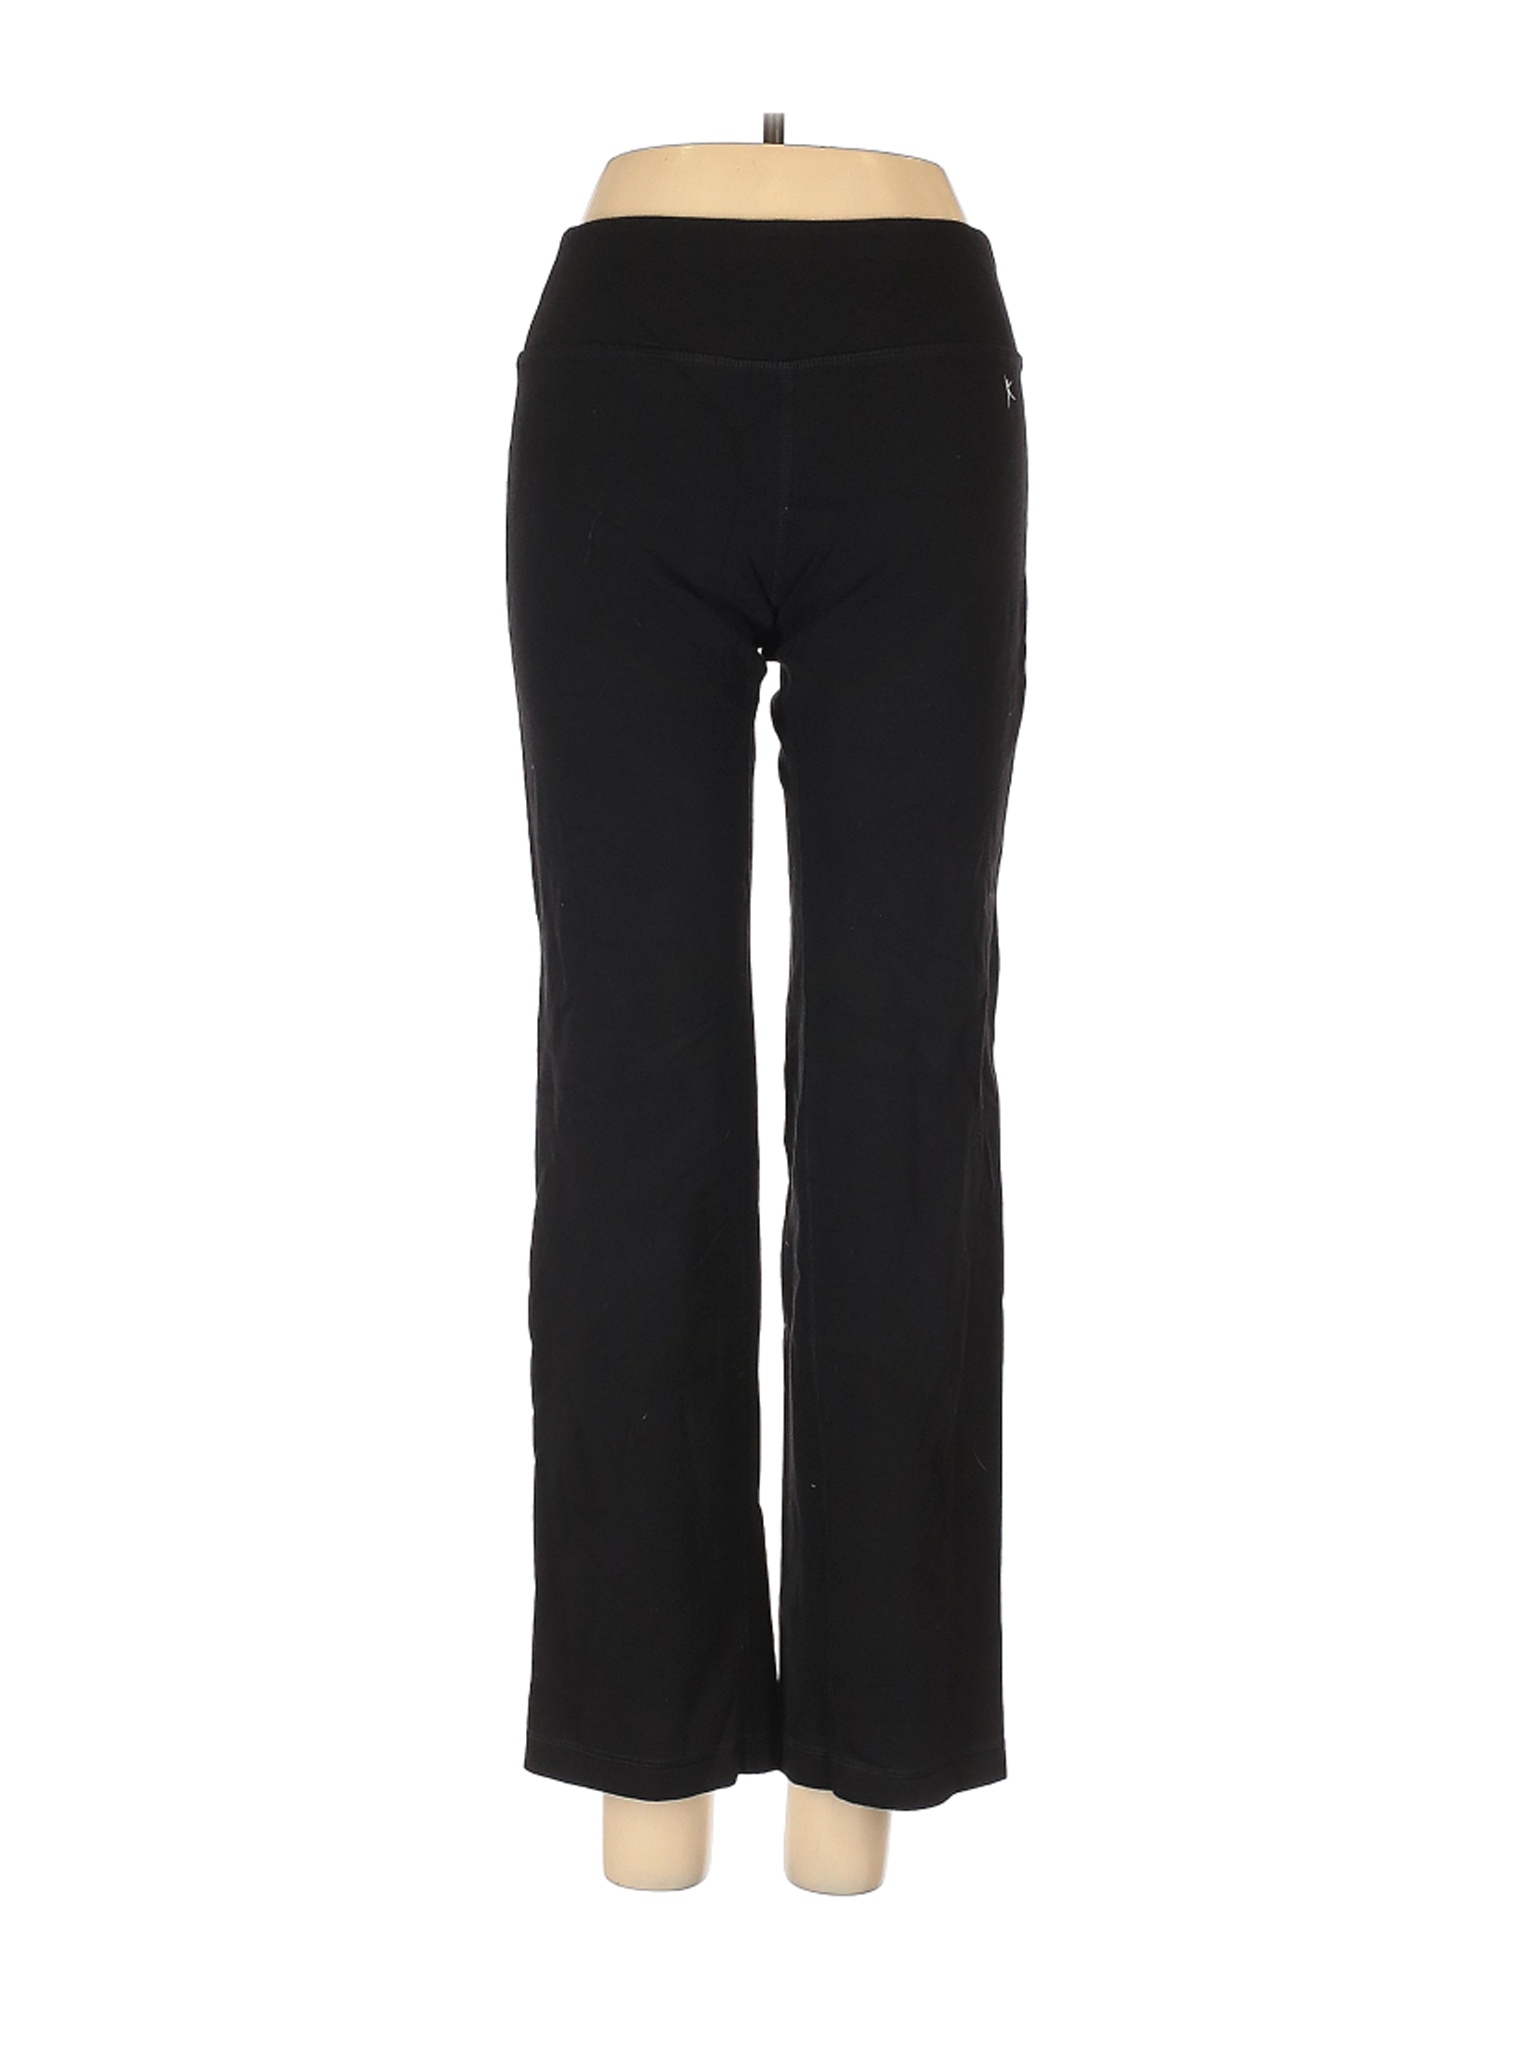 Danskin Now Women Black Active Pants 4 Petites | eBay